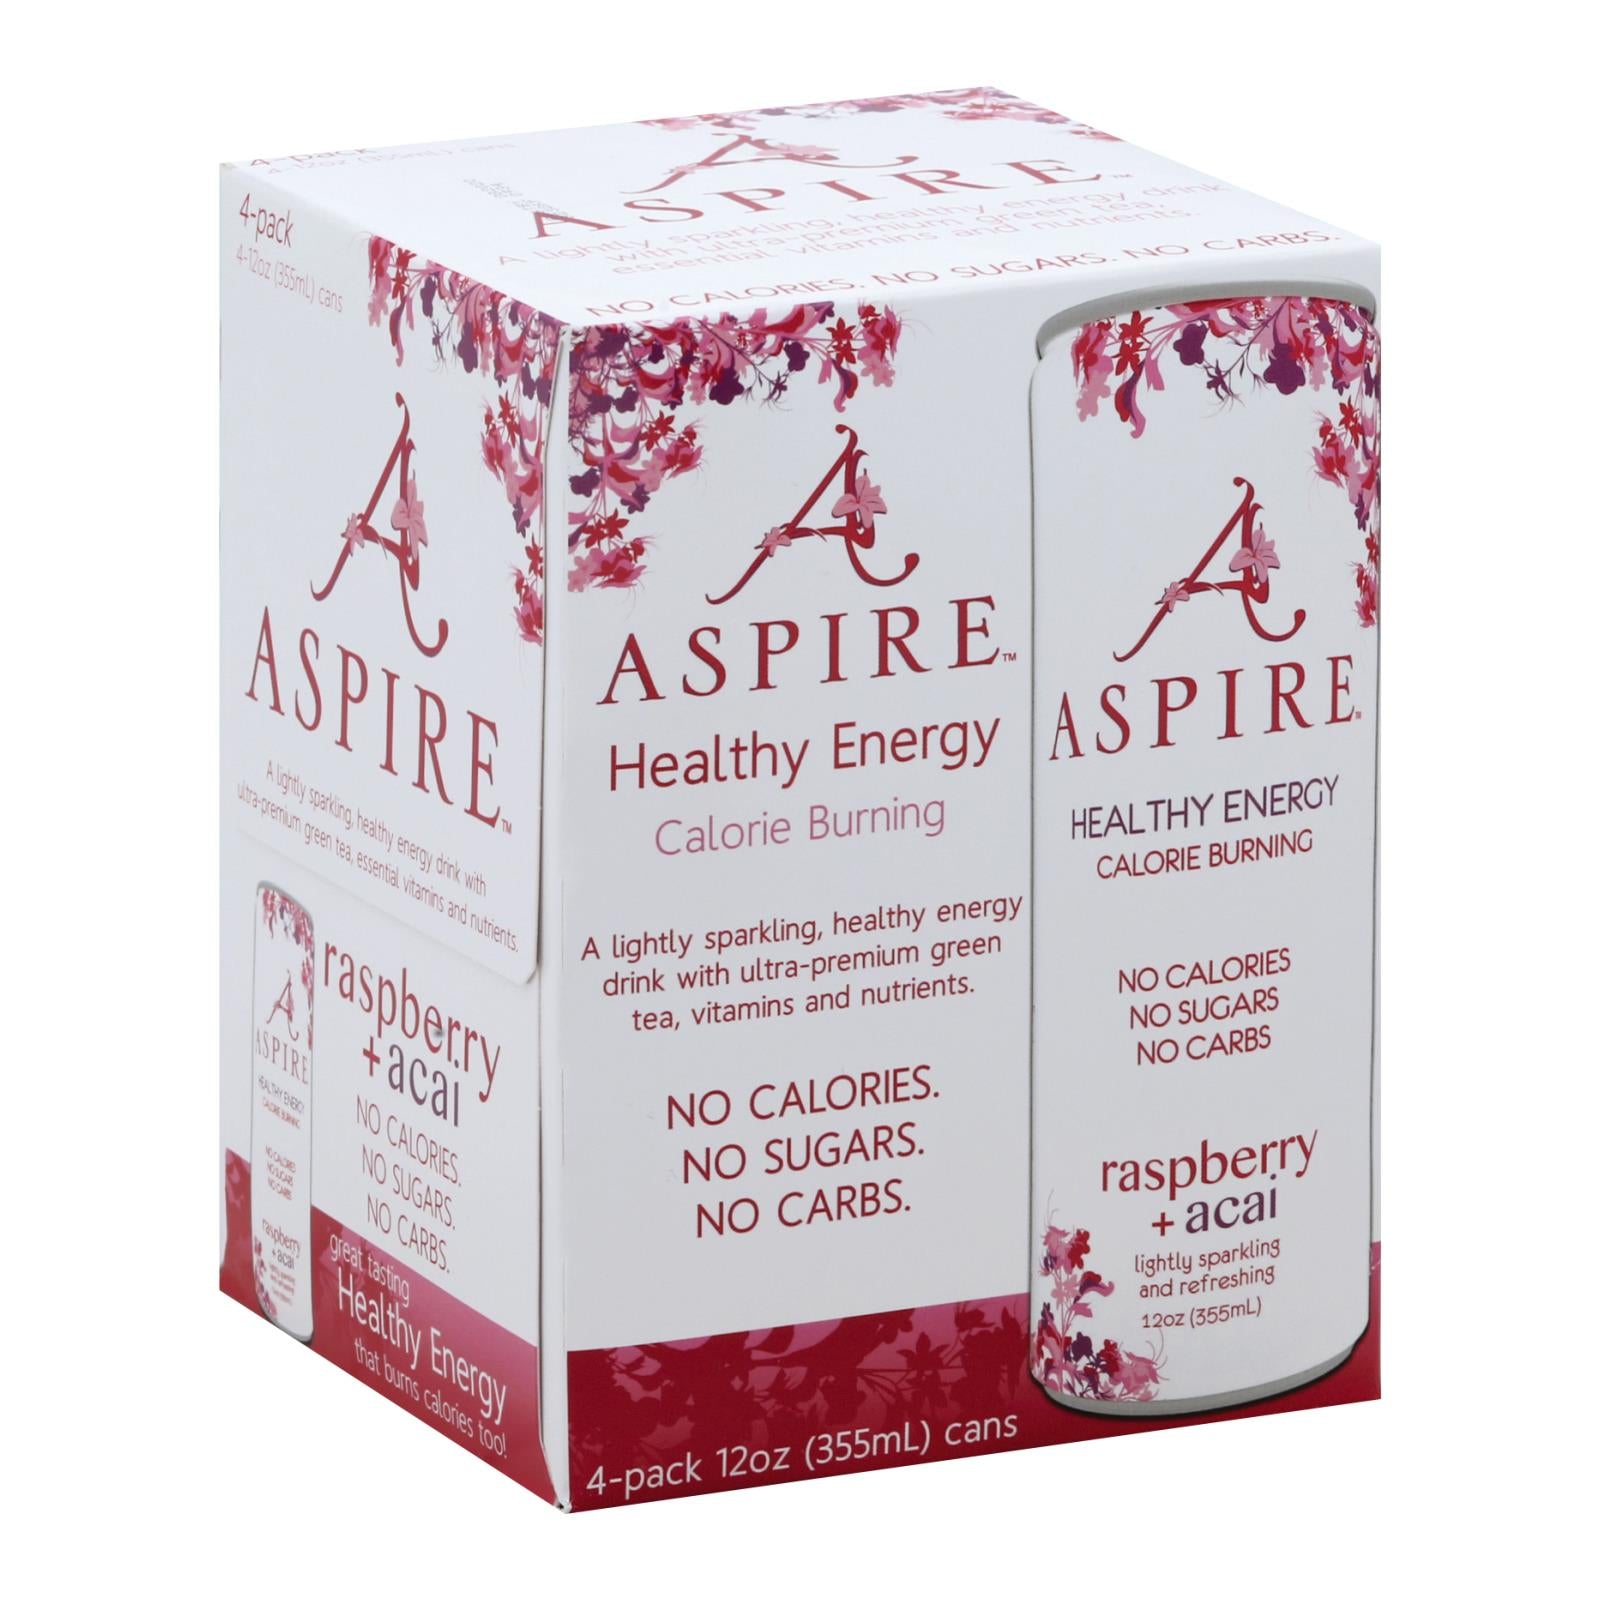 Aspire Healthy Energy, Aspire Healthy Energy - Sparkling Raspberry Acai - Case of 6 - 4/12 OZ (Pack of 6)